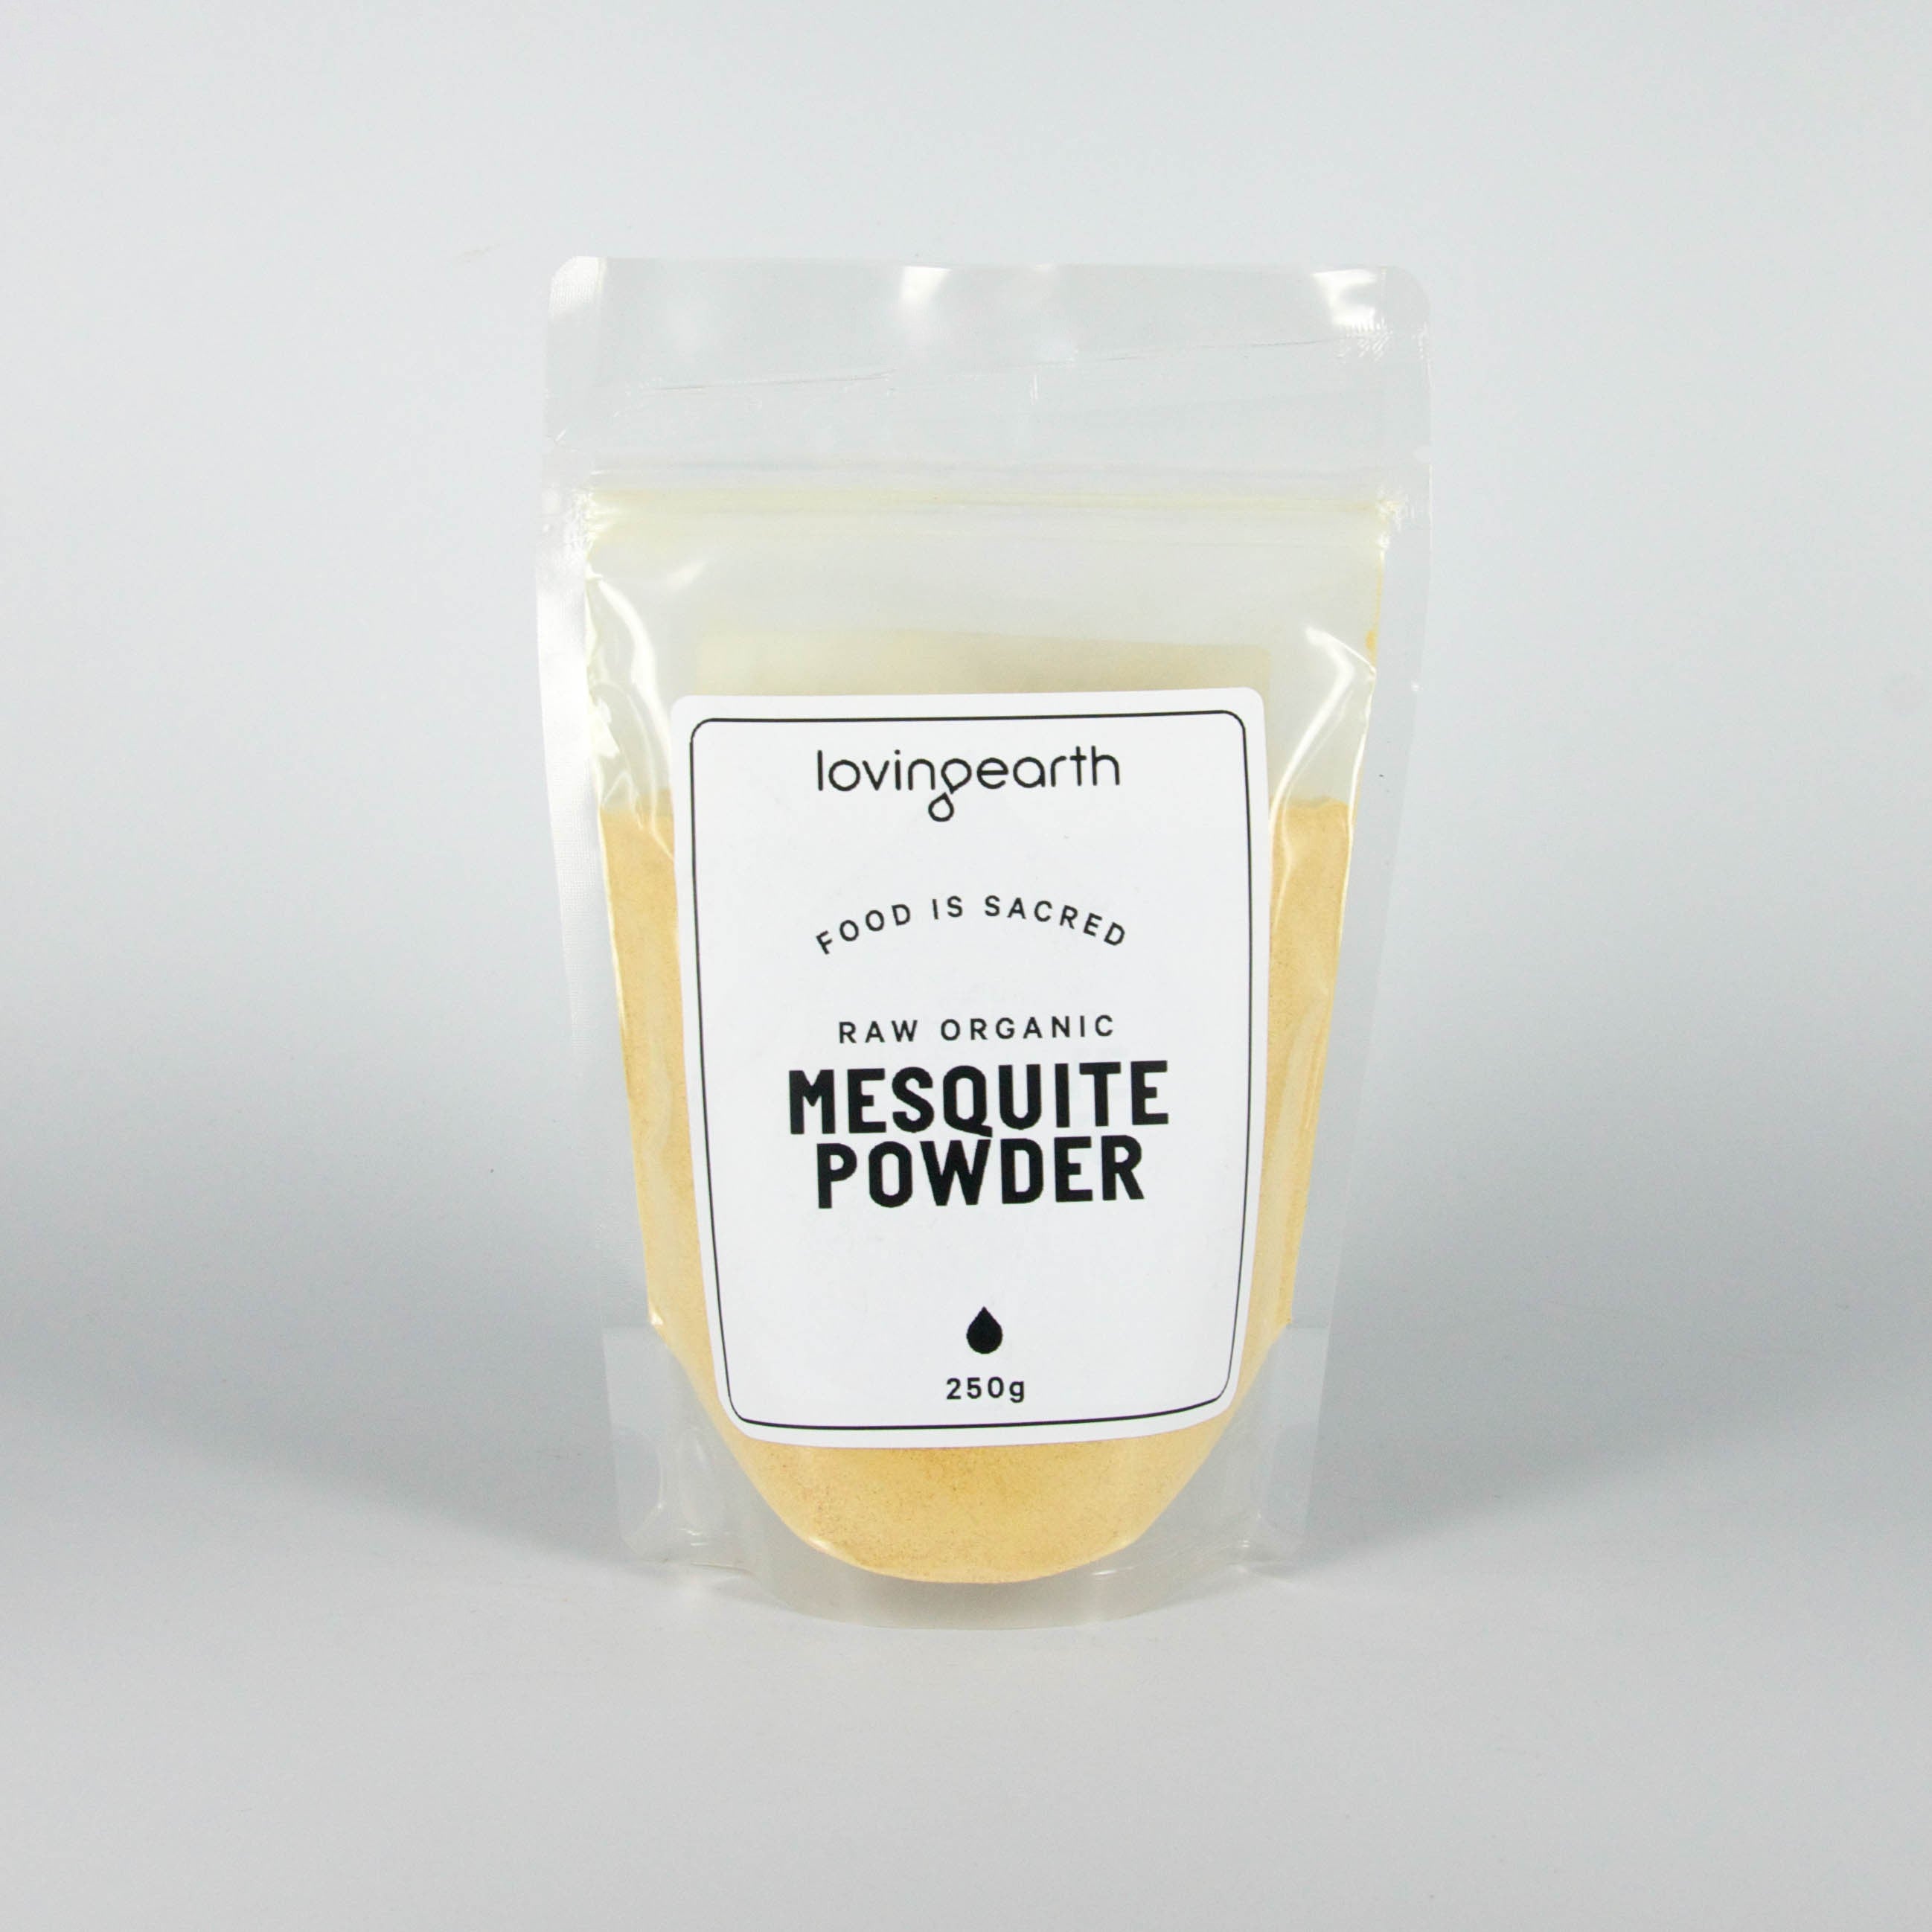 loving earth mesquite powder